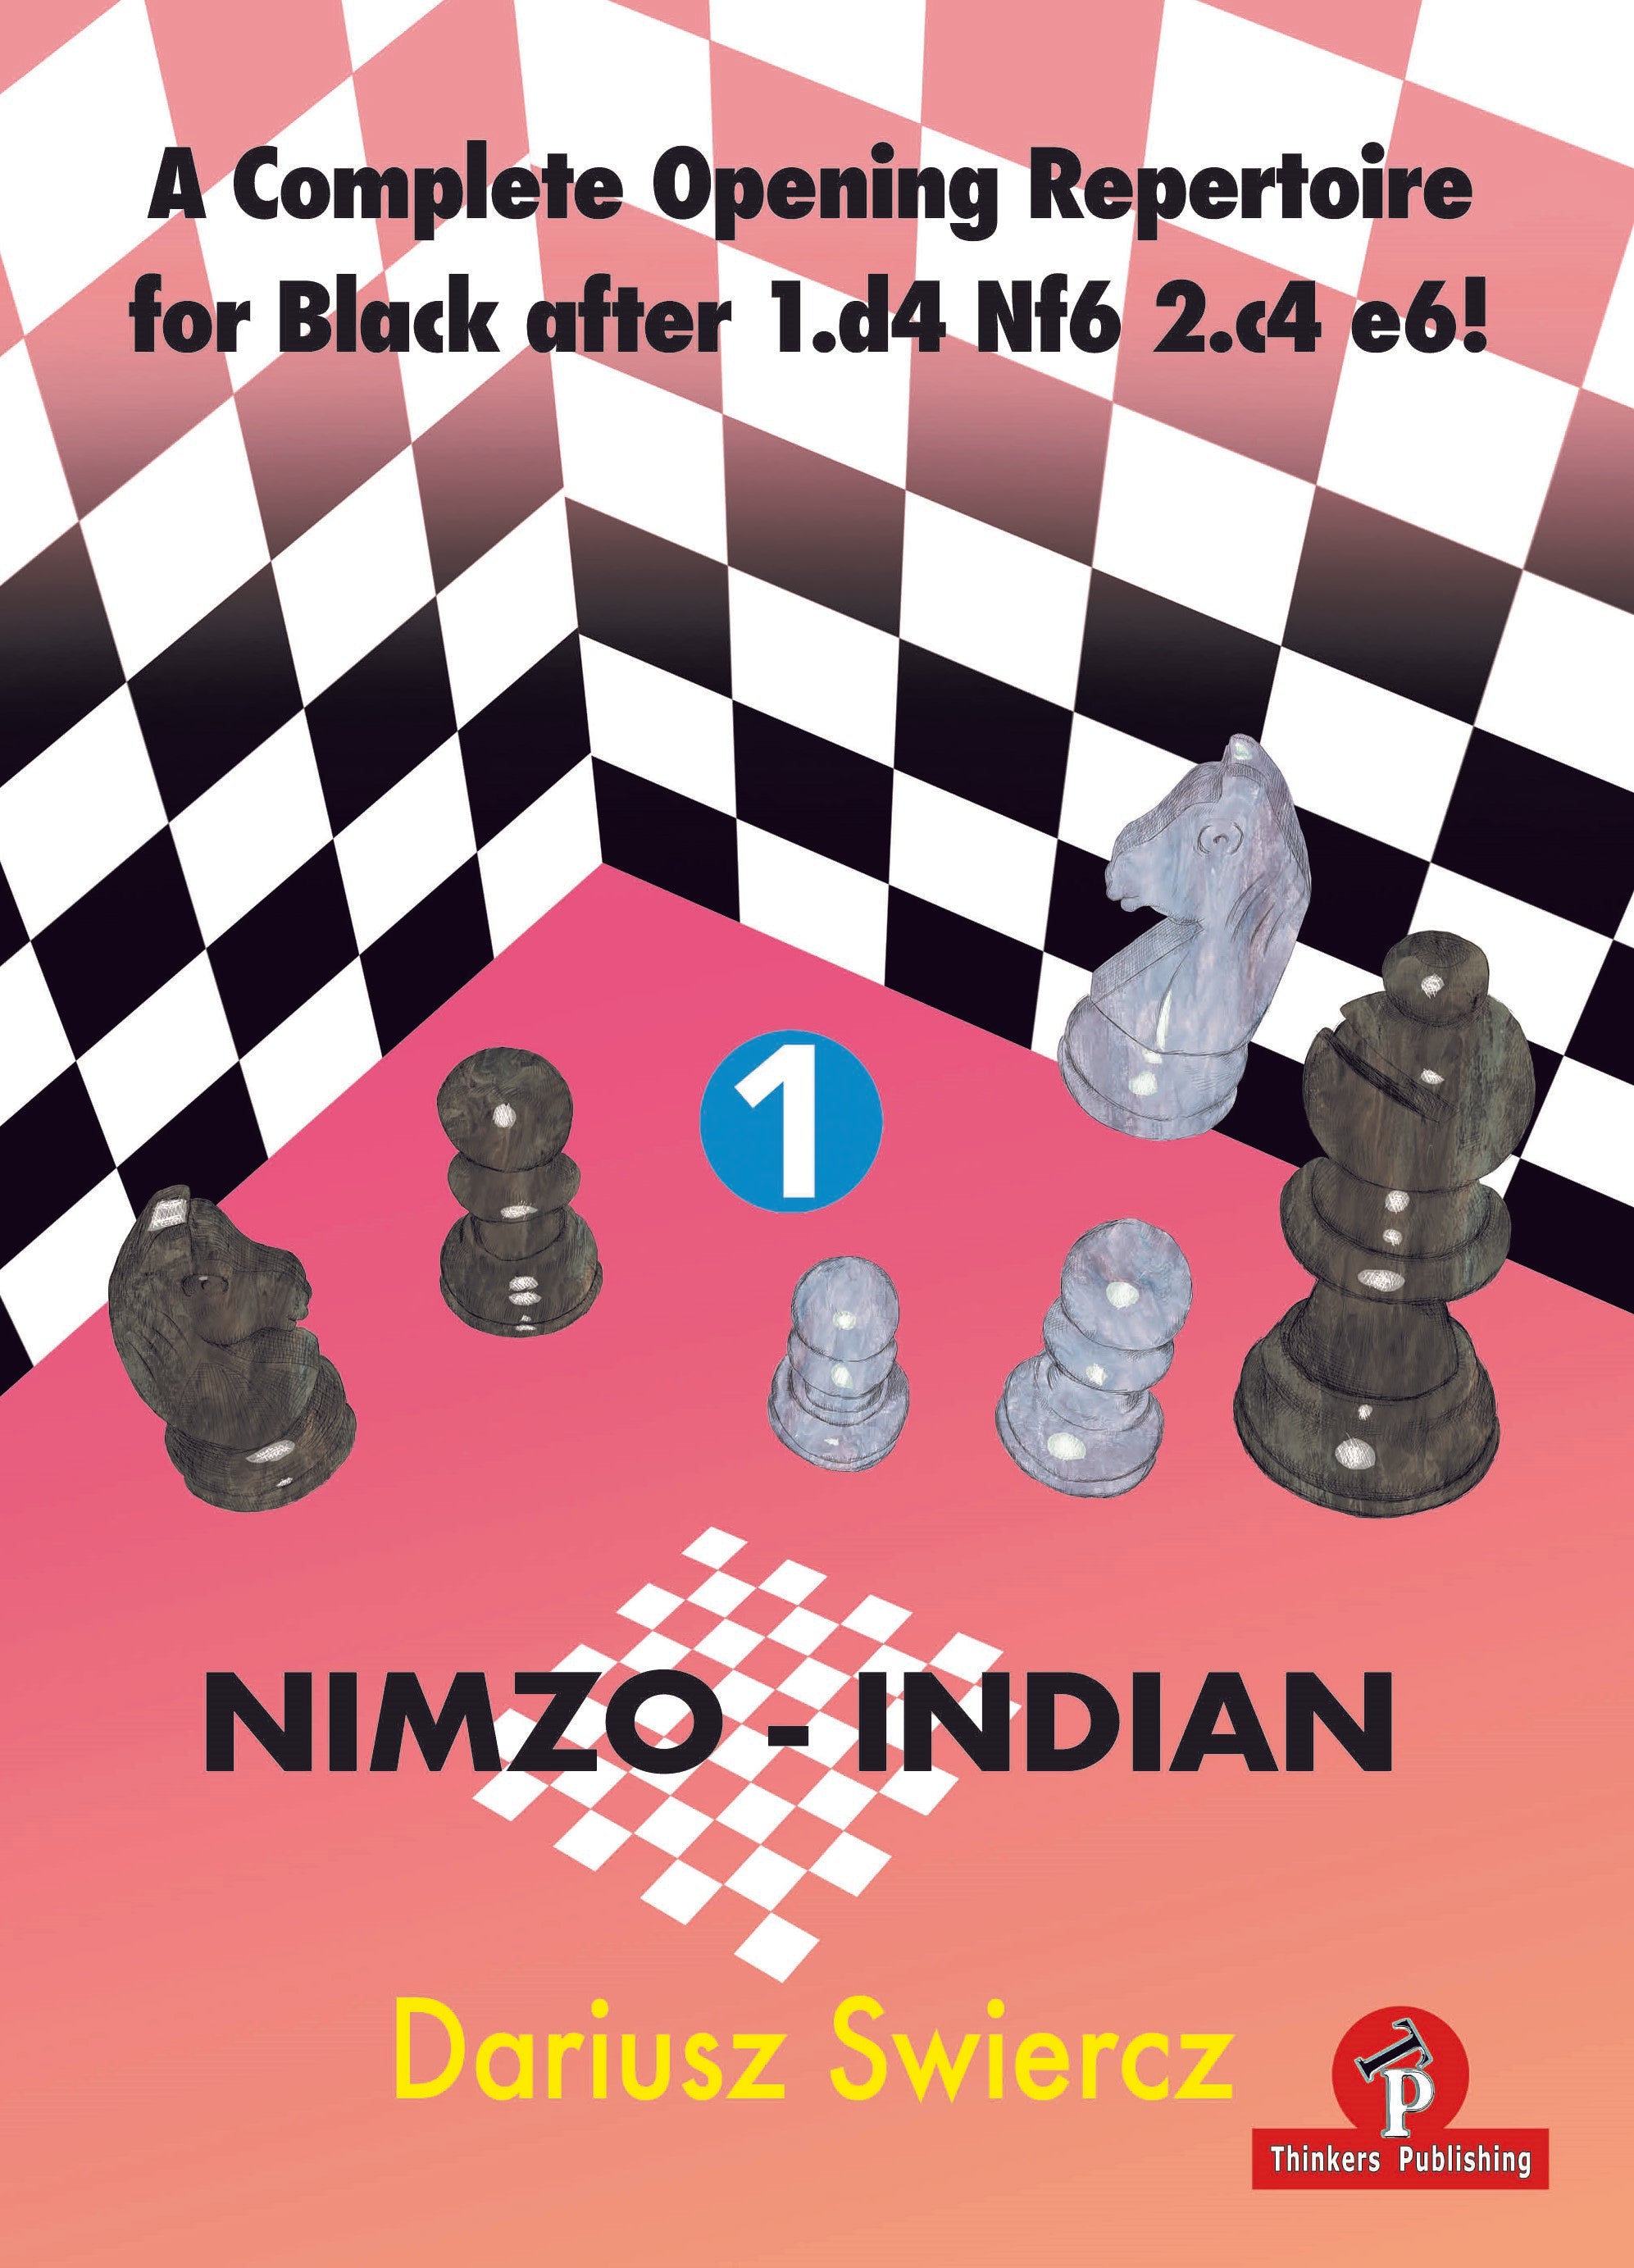 New: A Complete Black Repertoire against 1.d4 & 1.Nf3 & 1.c4